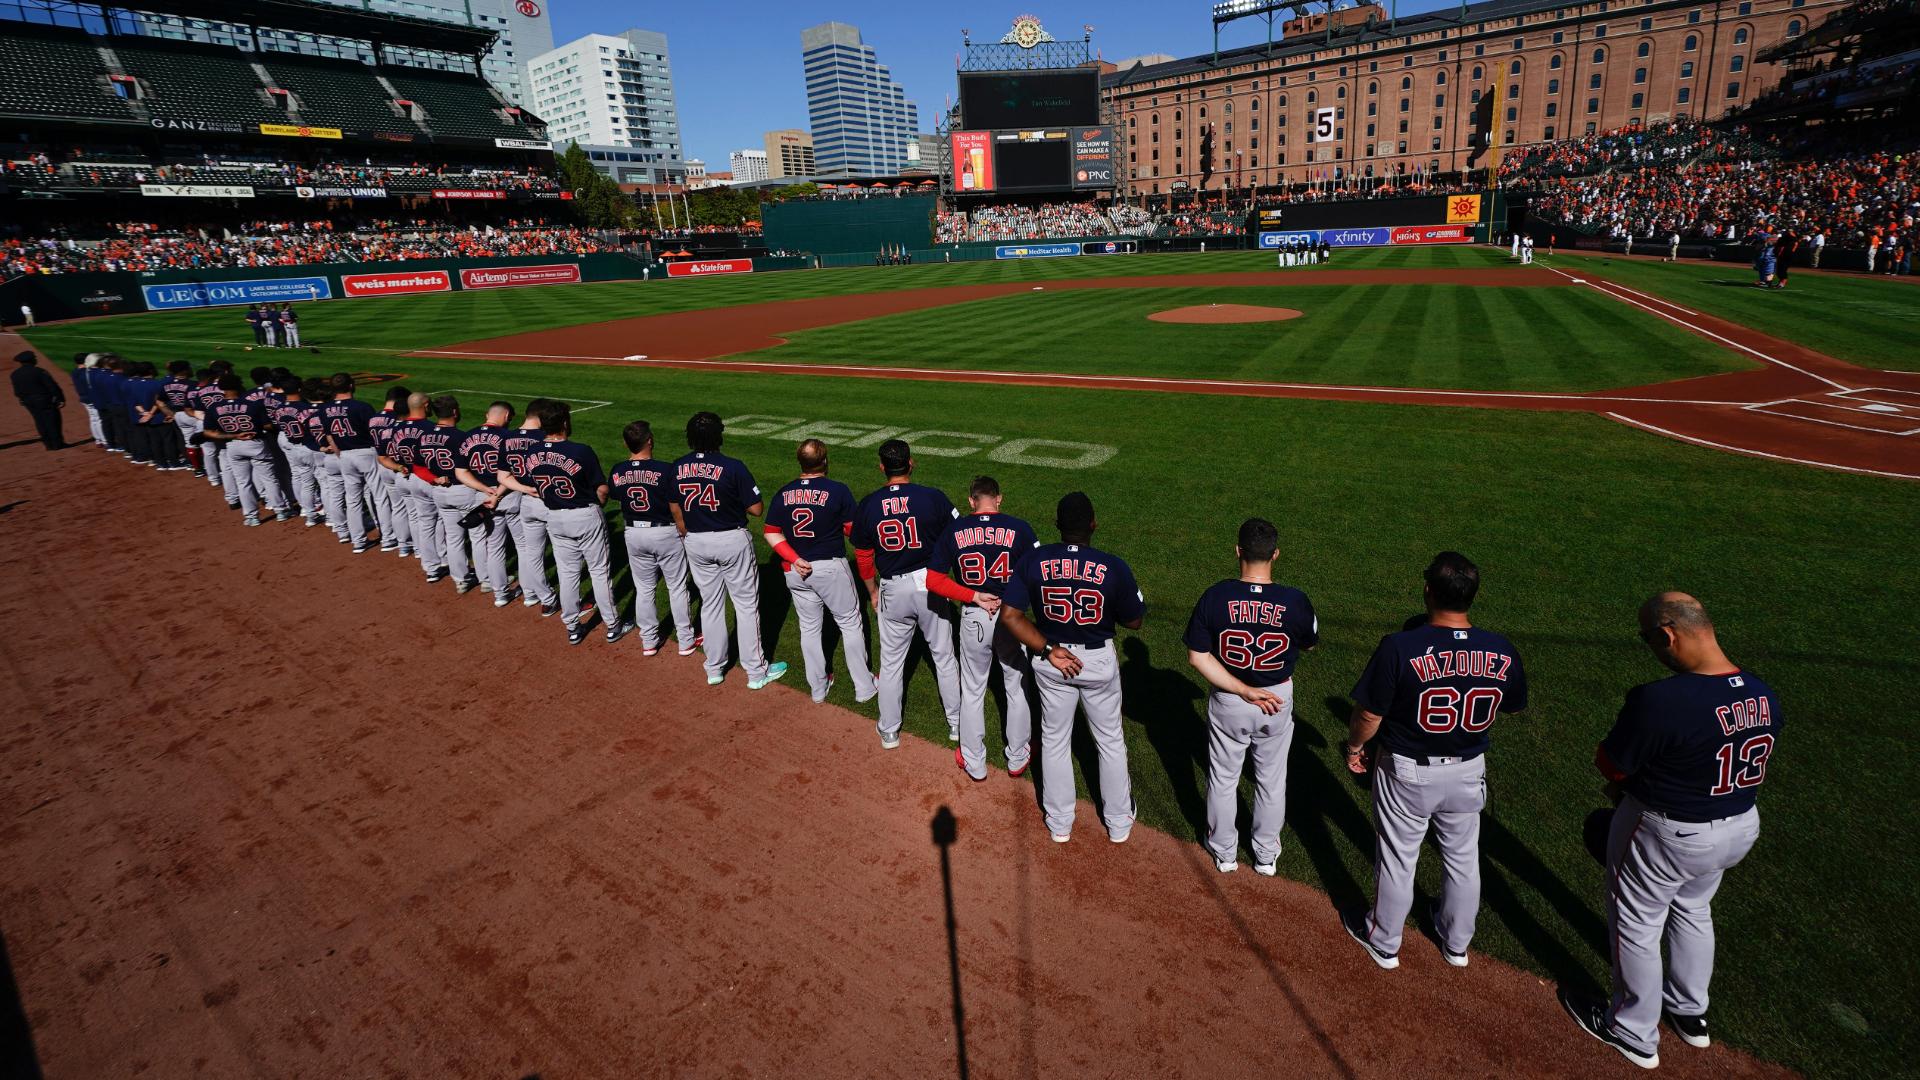 Jose Fernandez dies: MLB teams pay tribute - Sports Illustrated